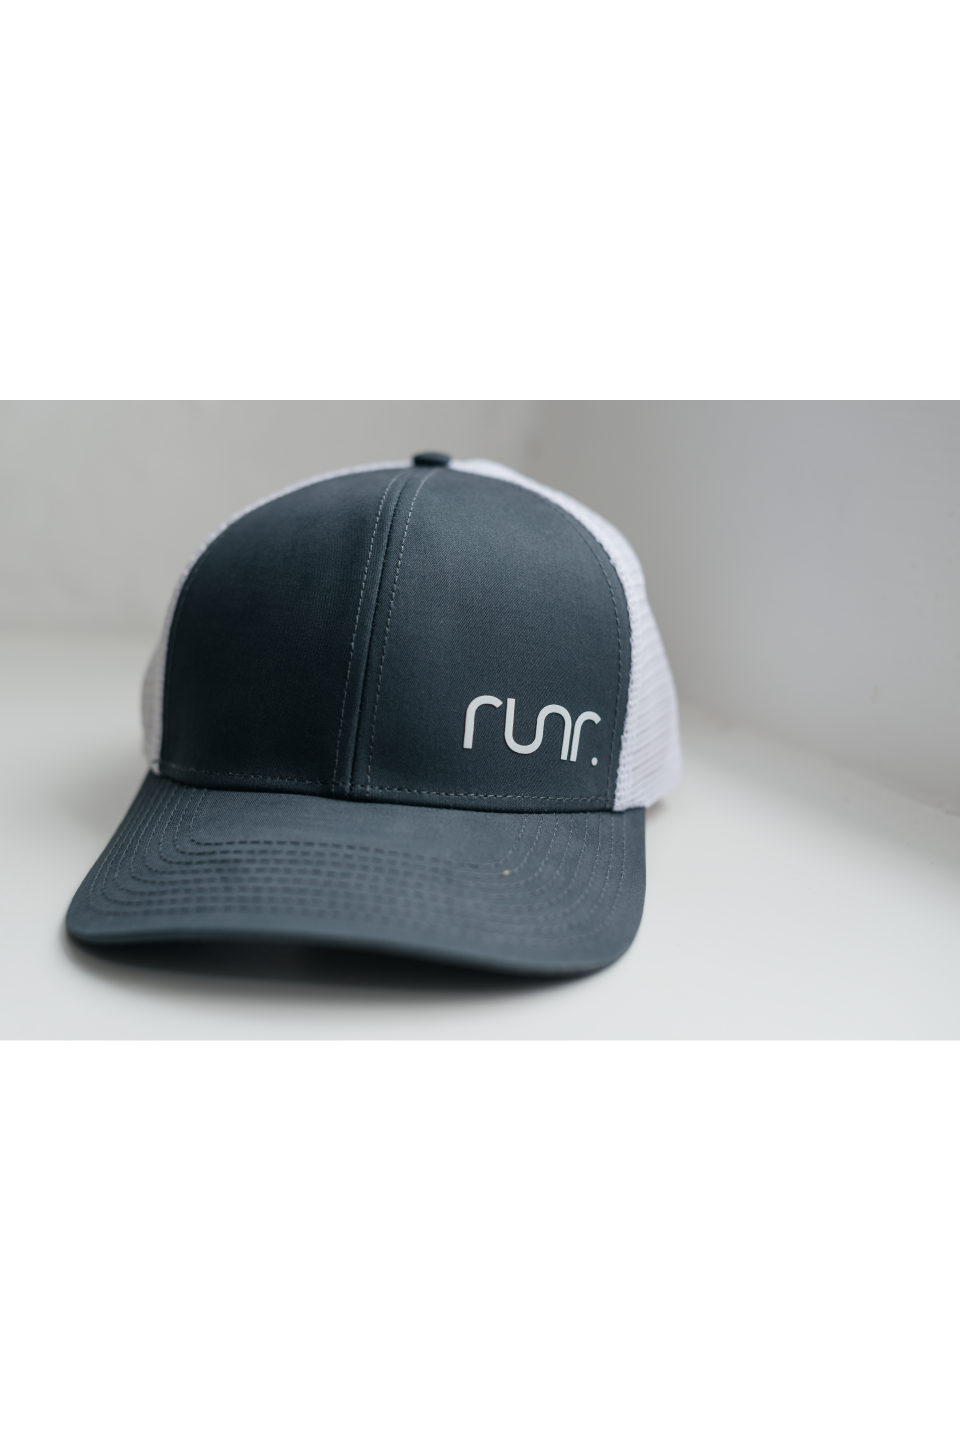 Runr Two Tone Retro Trucker Hat - Charcoal & White